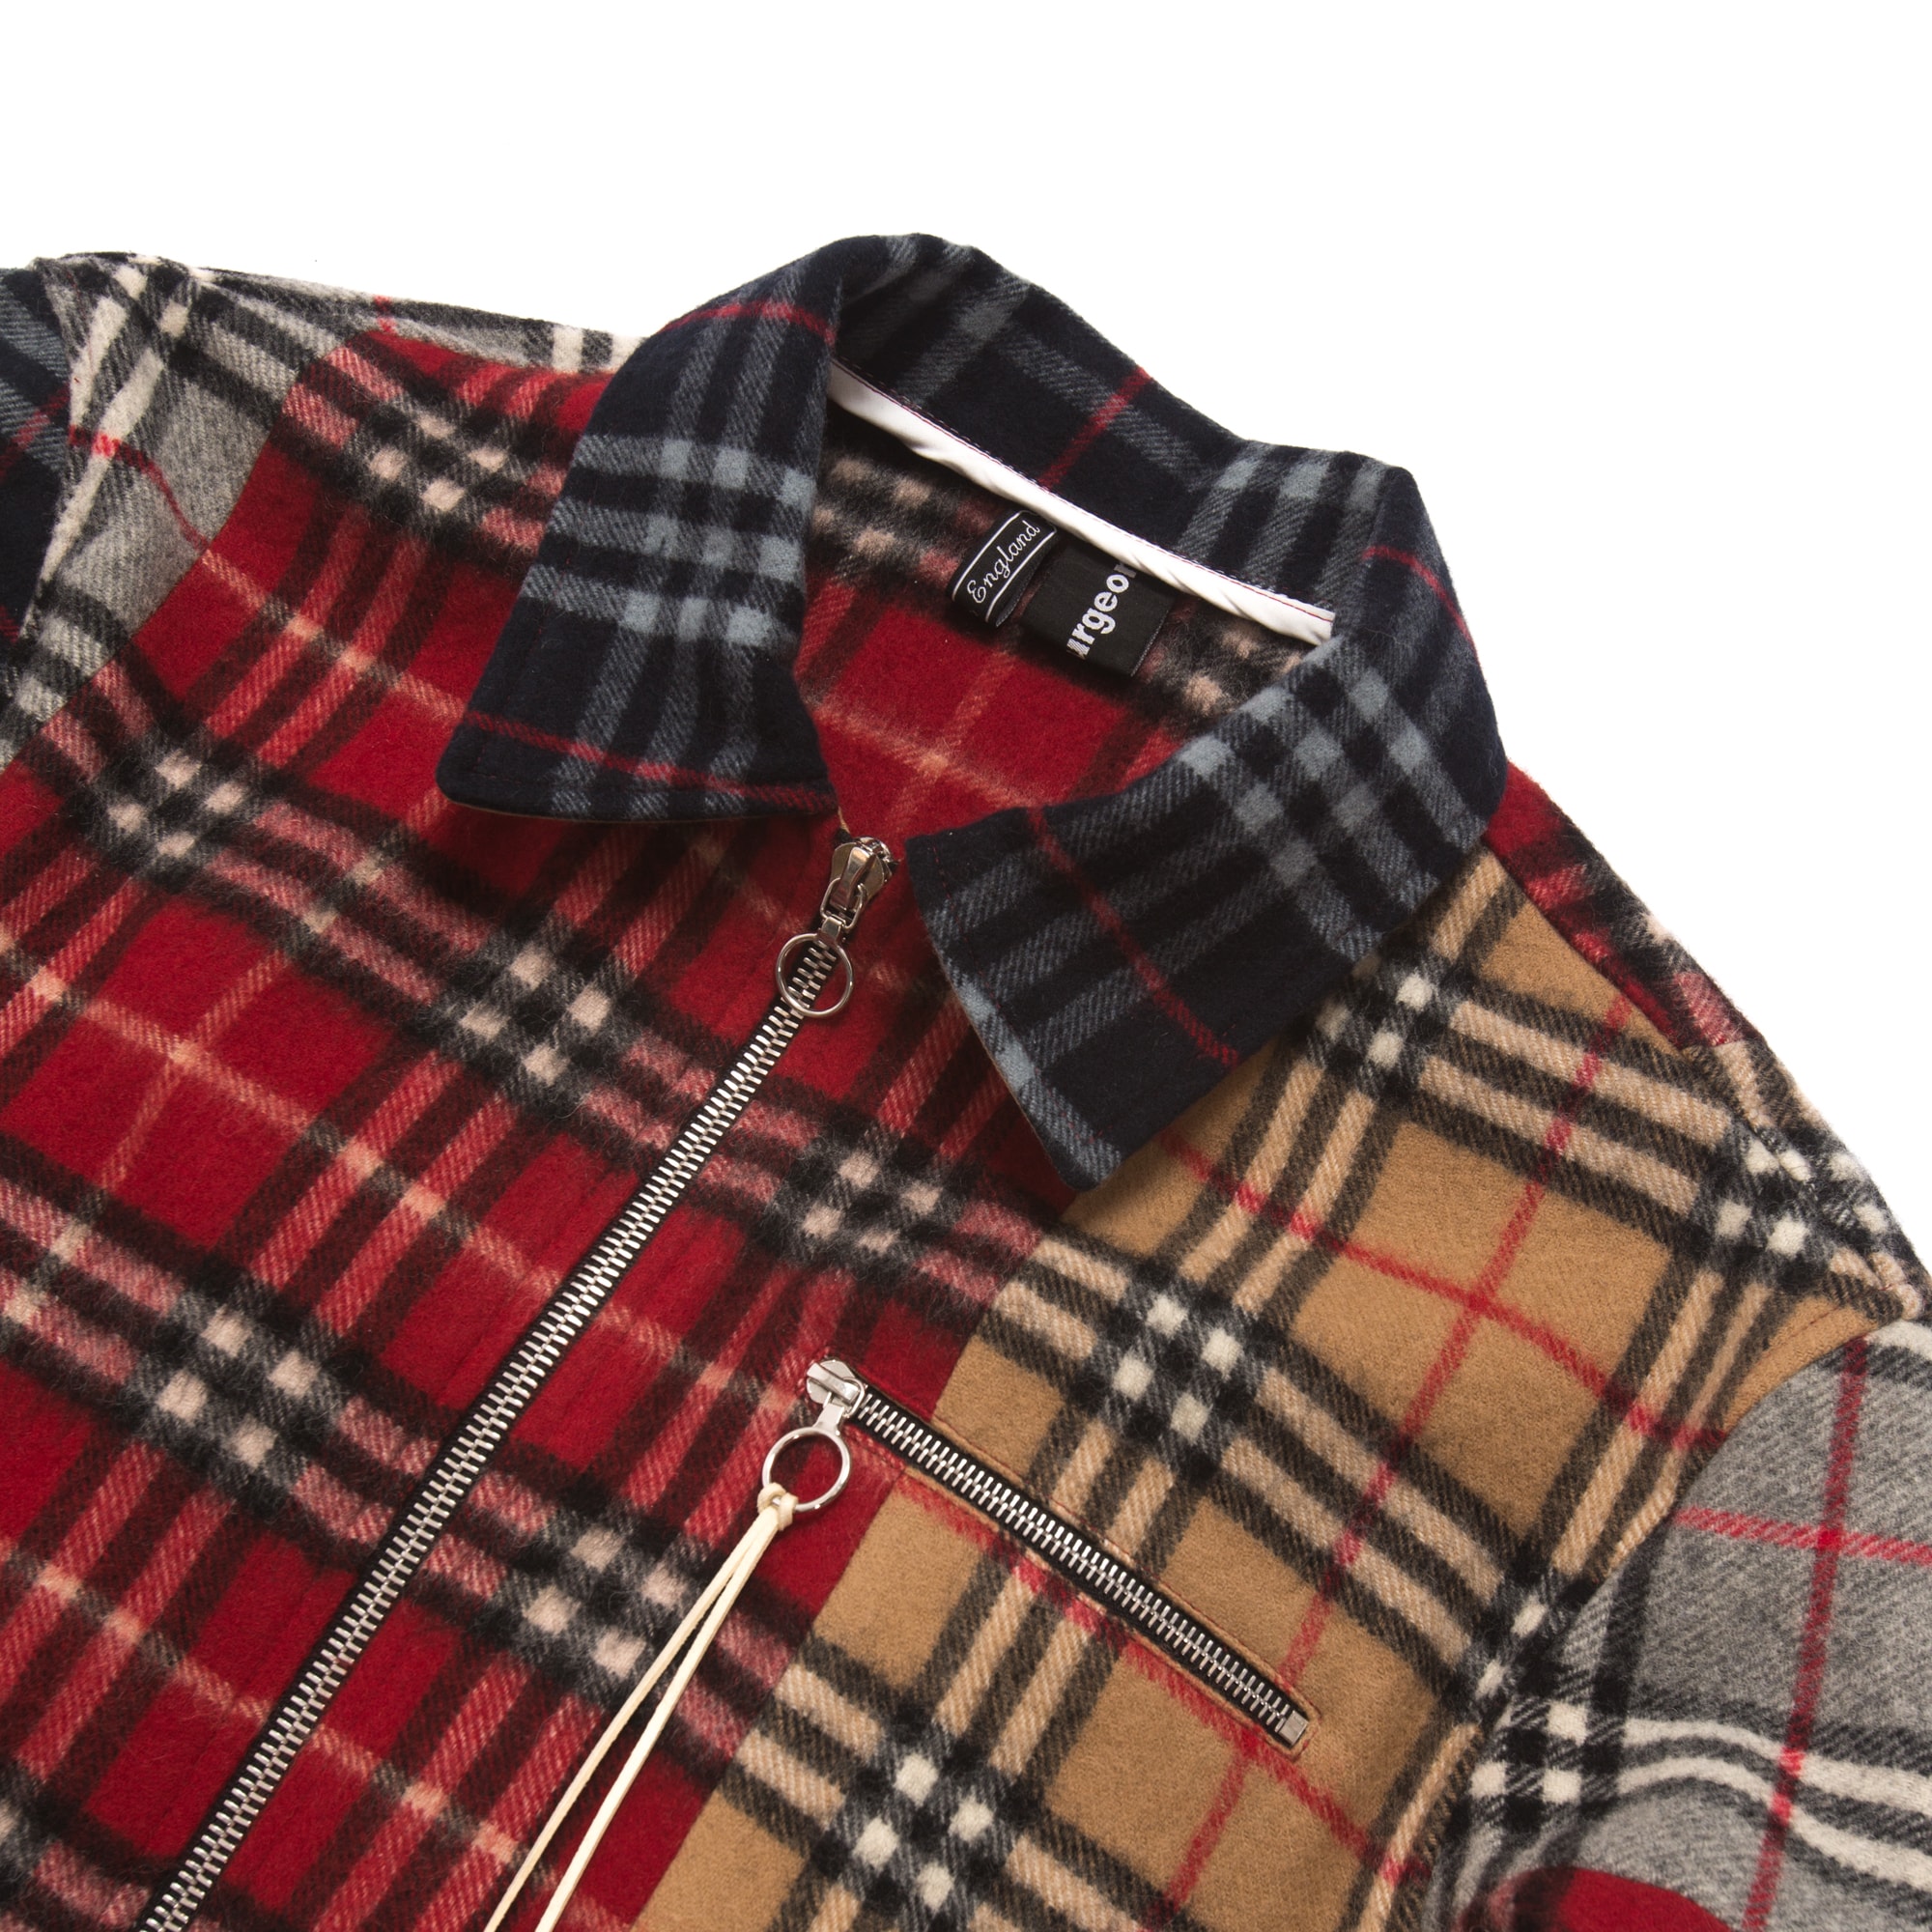 clothsurgeon 將 Burberry 復古格紋圍巾改造成拼接外套